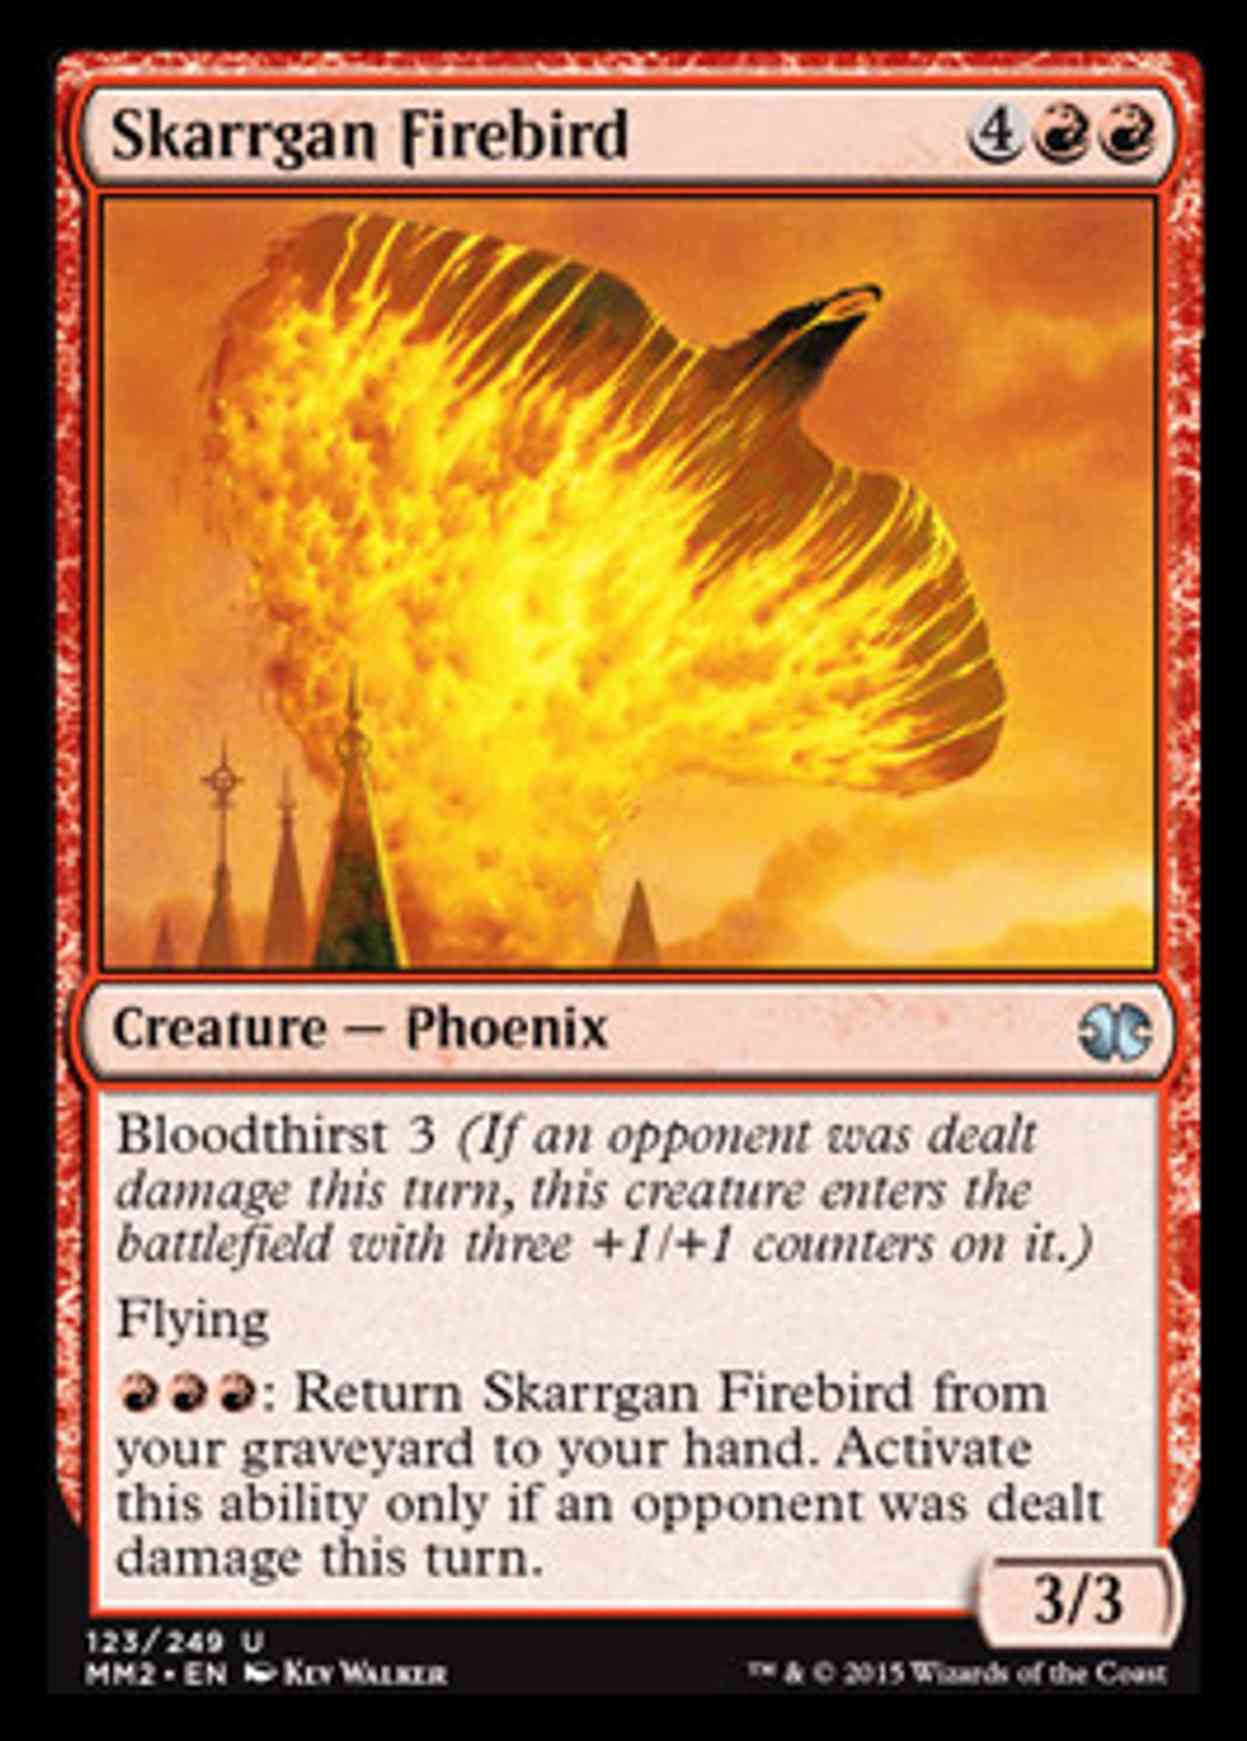 Skarrgan Firebird magic card front